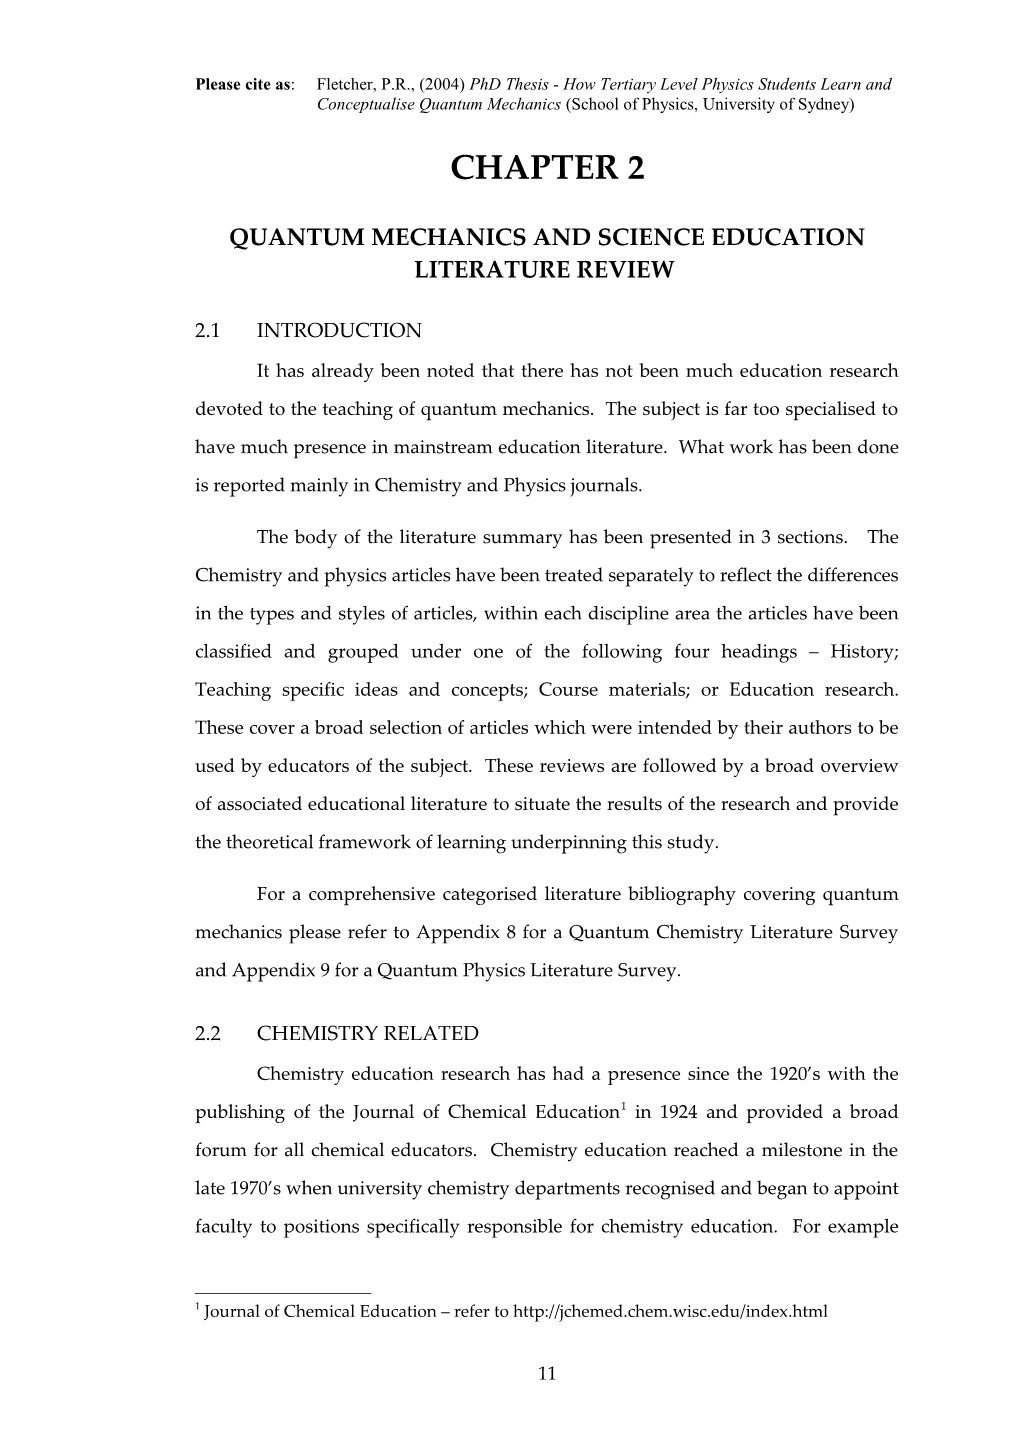 Quantum Mechanics and Science Education Literature Review